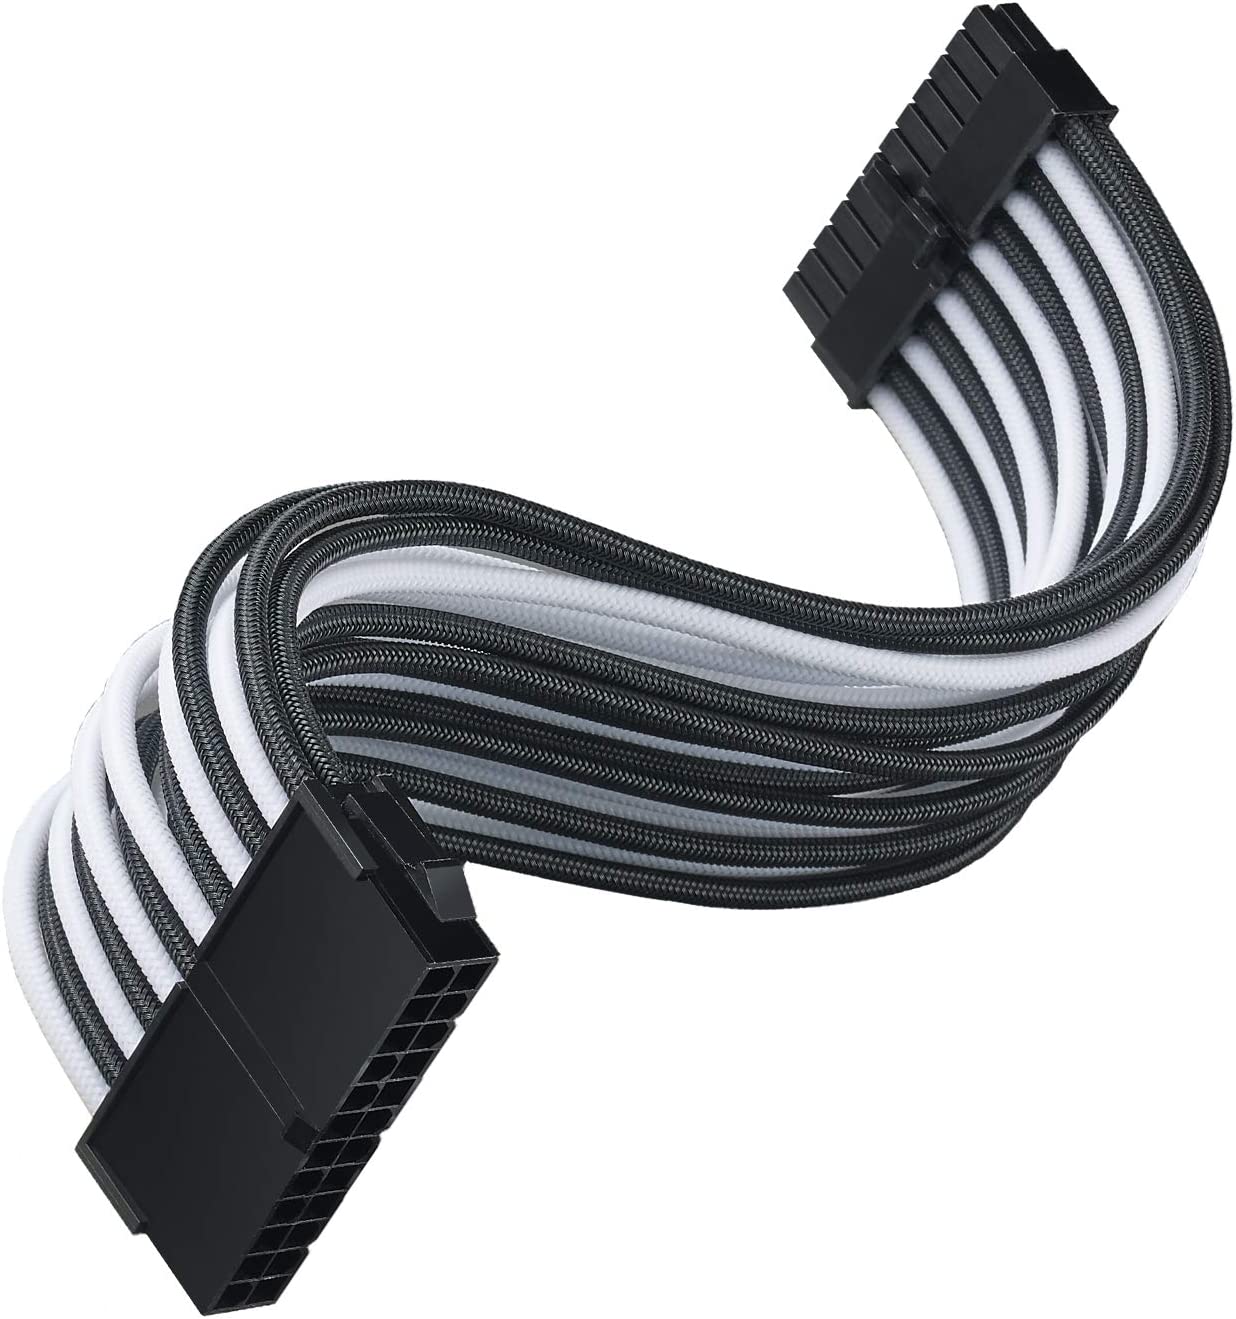 SilverStone ATX extension cable SST-PP07E-MBBW (black/white, 30cm)